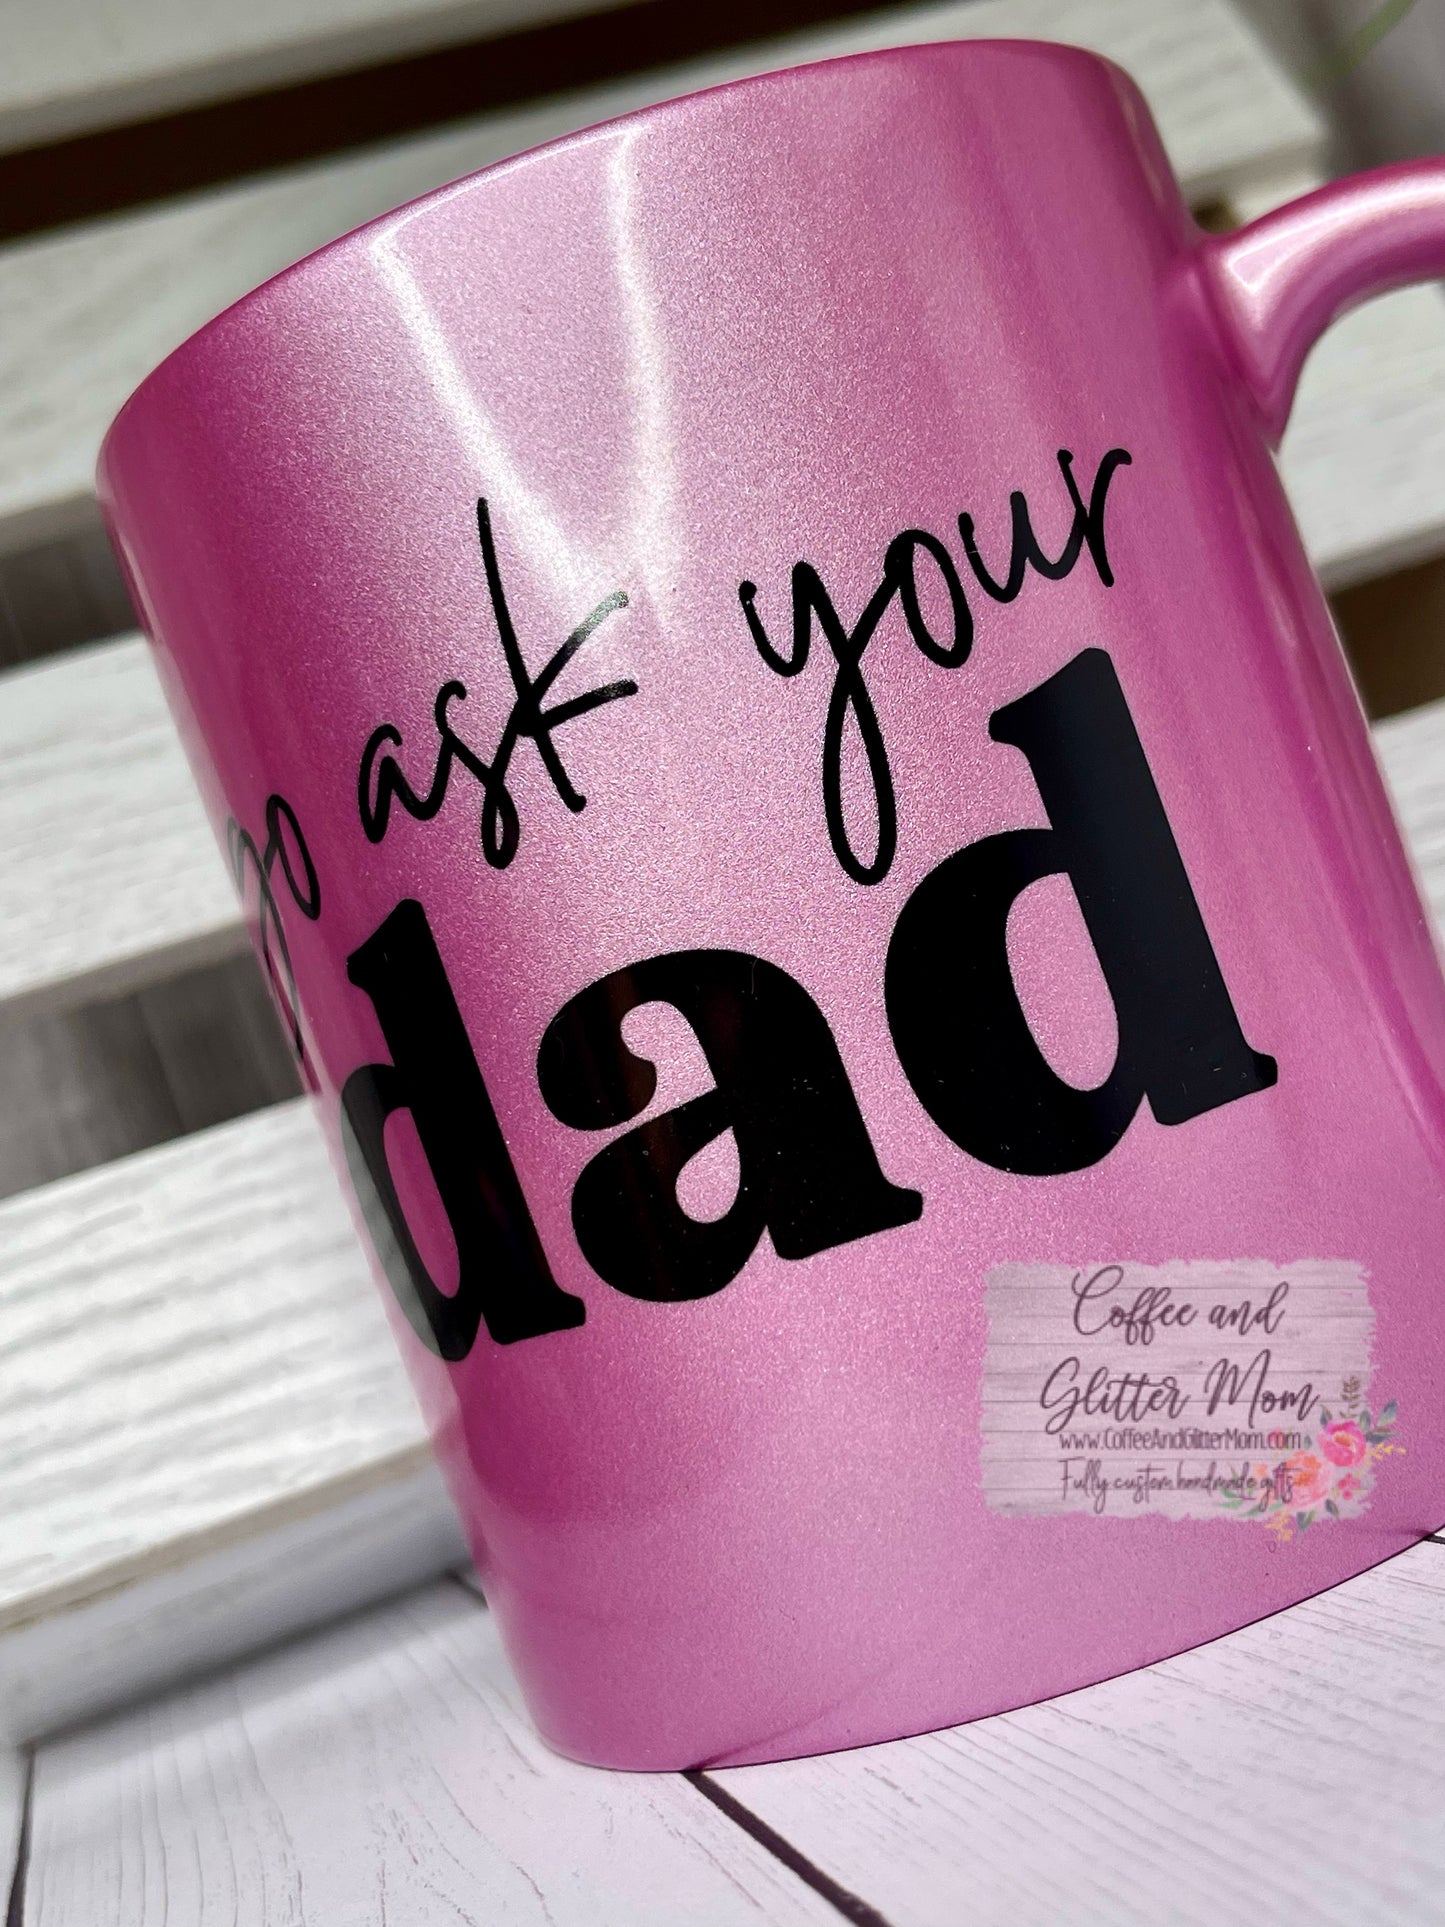 Mommy Needs Coffee/Go Ask Dad 11oz Pink Pearl Ceramic Mug